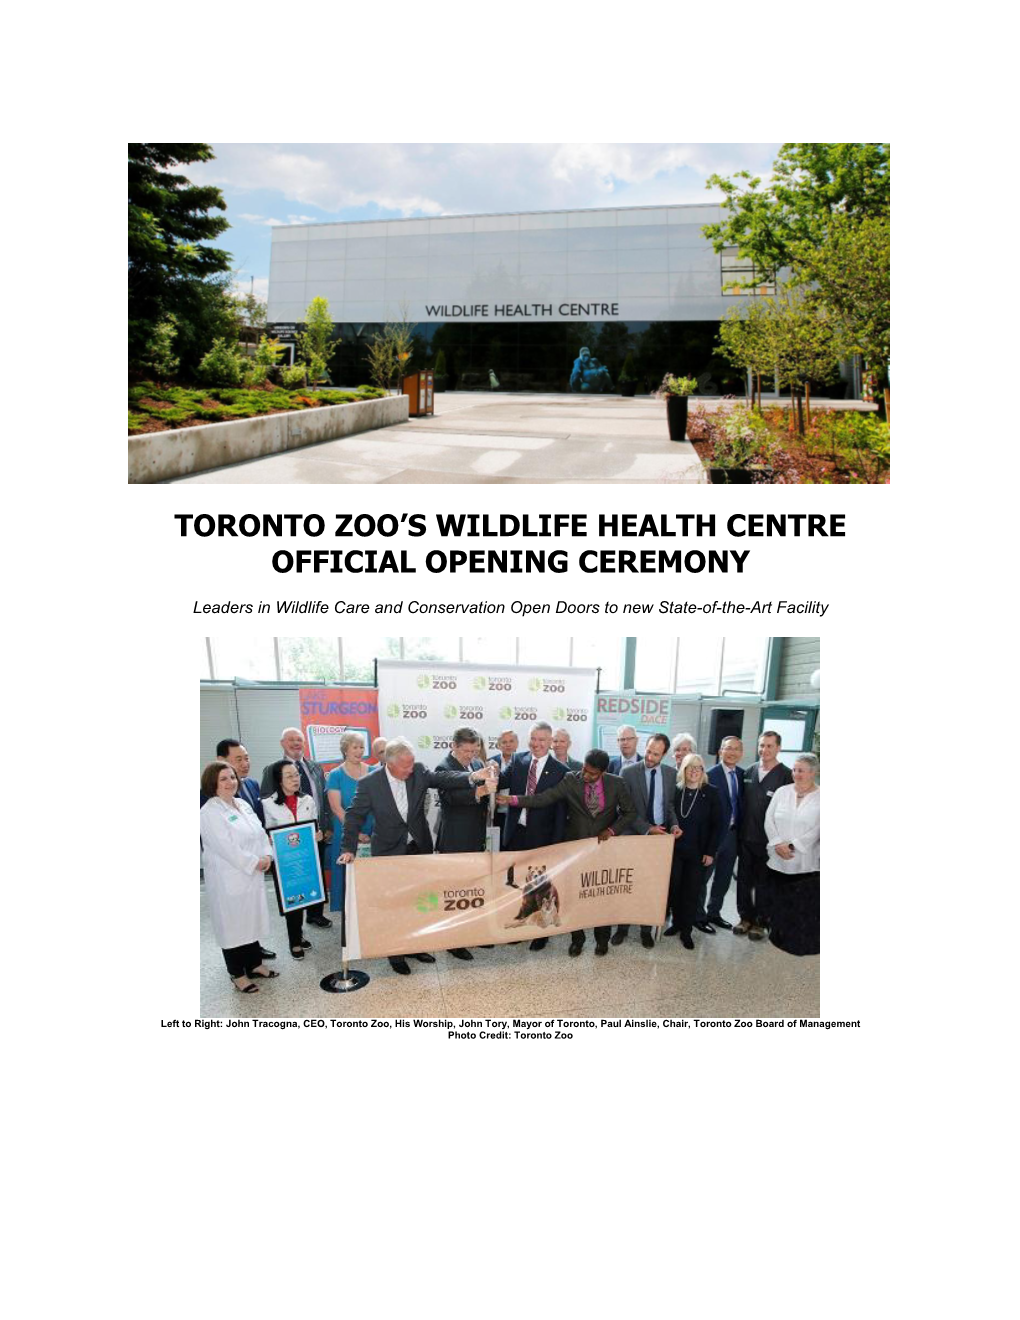 Toronto Zoo's Wildlife Health Centre Grand Opening